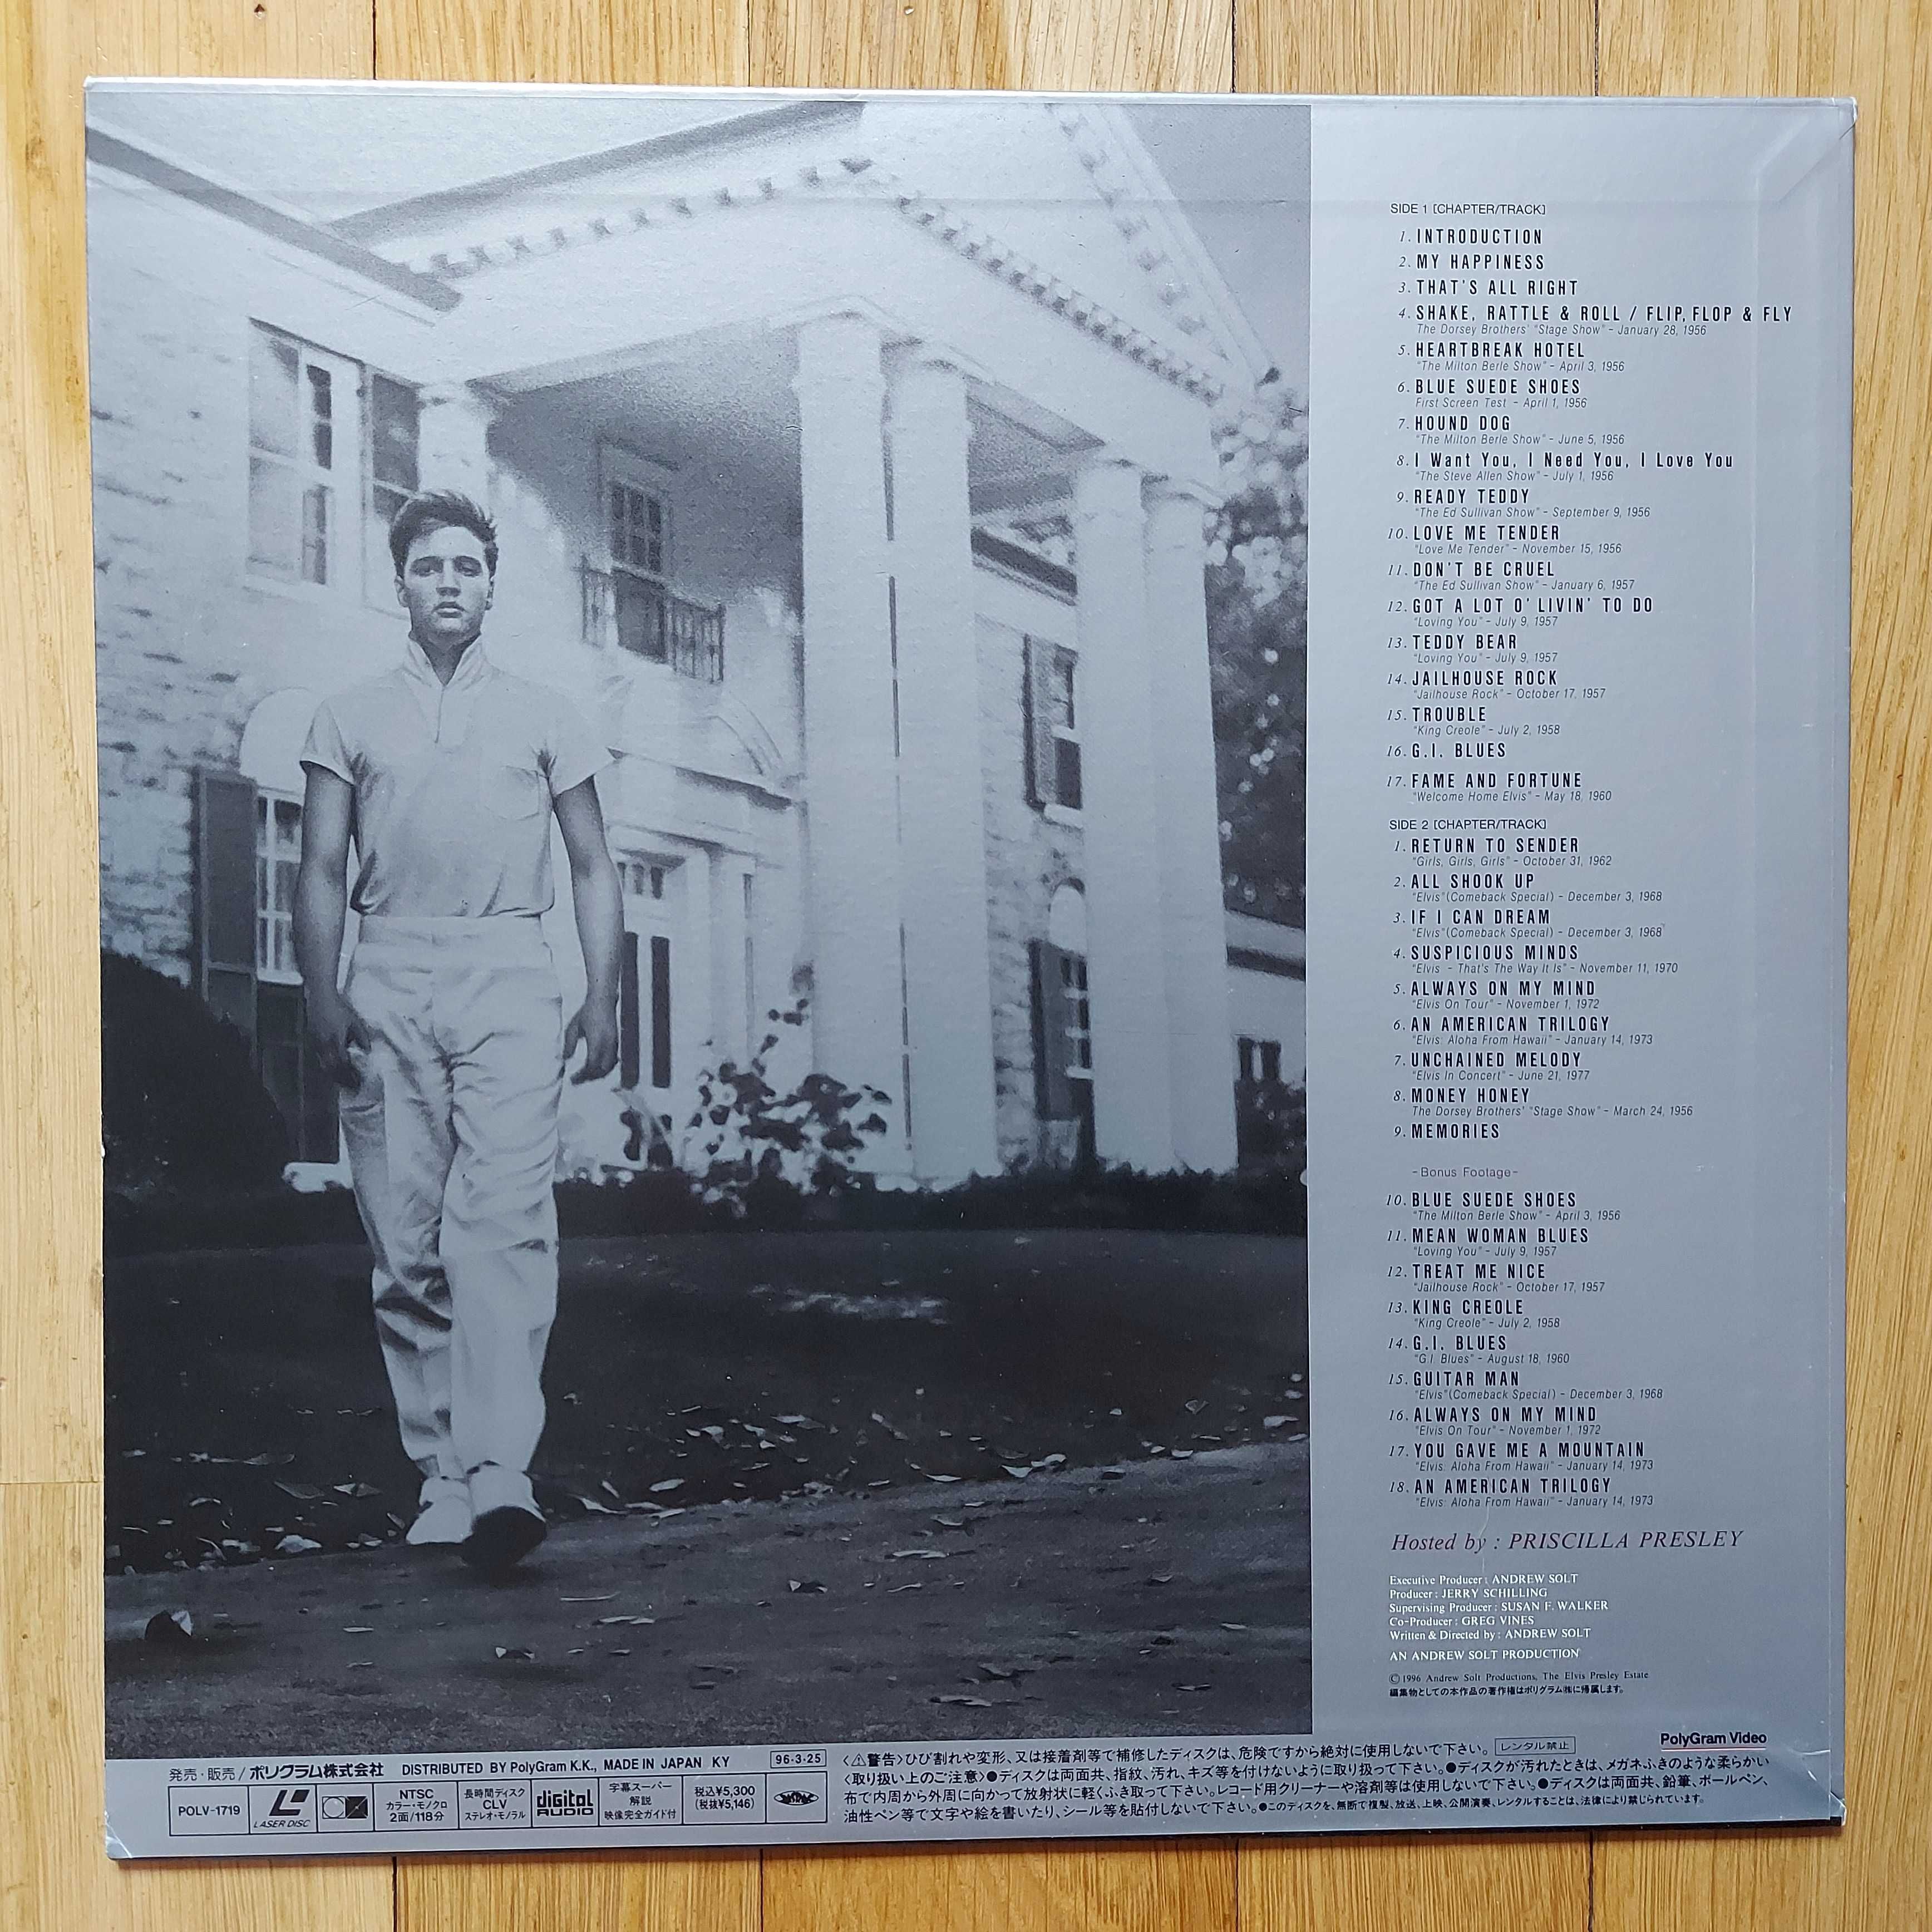 Laserdisc Elvis Presley ‎The Great Performances (Volume One: Center ..